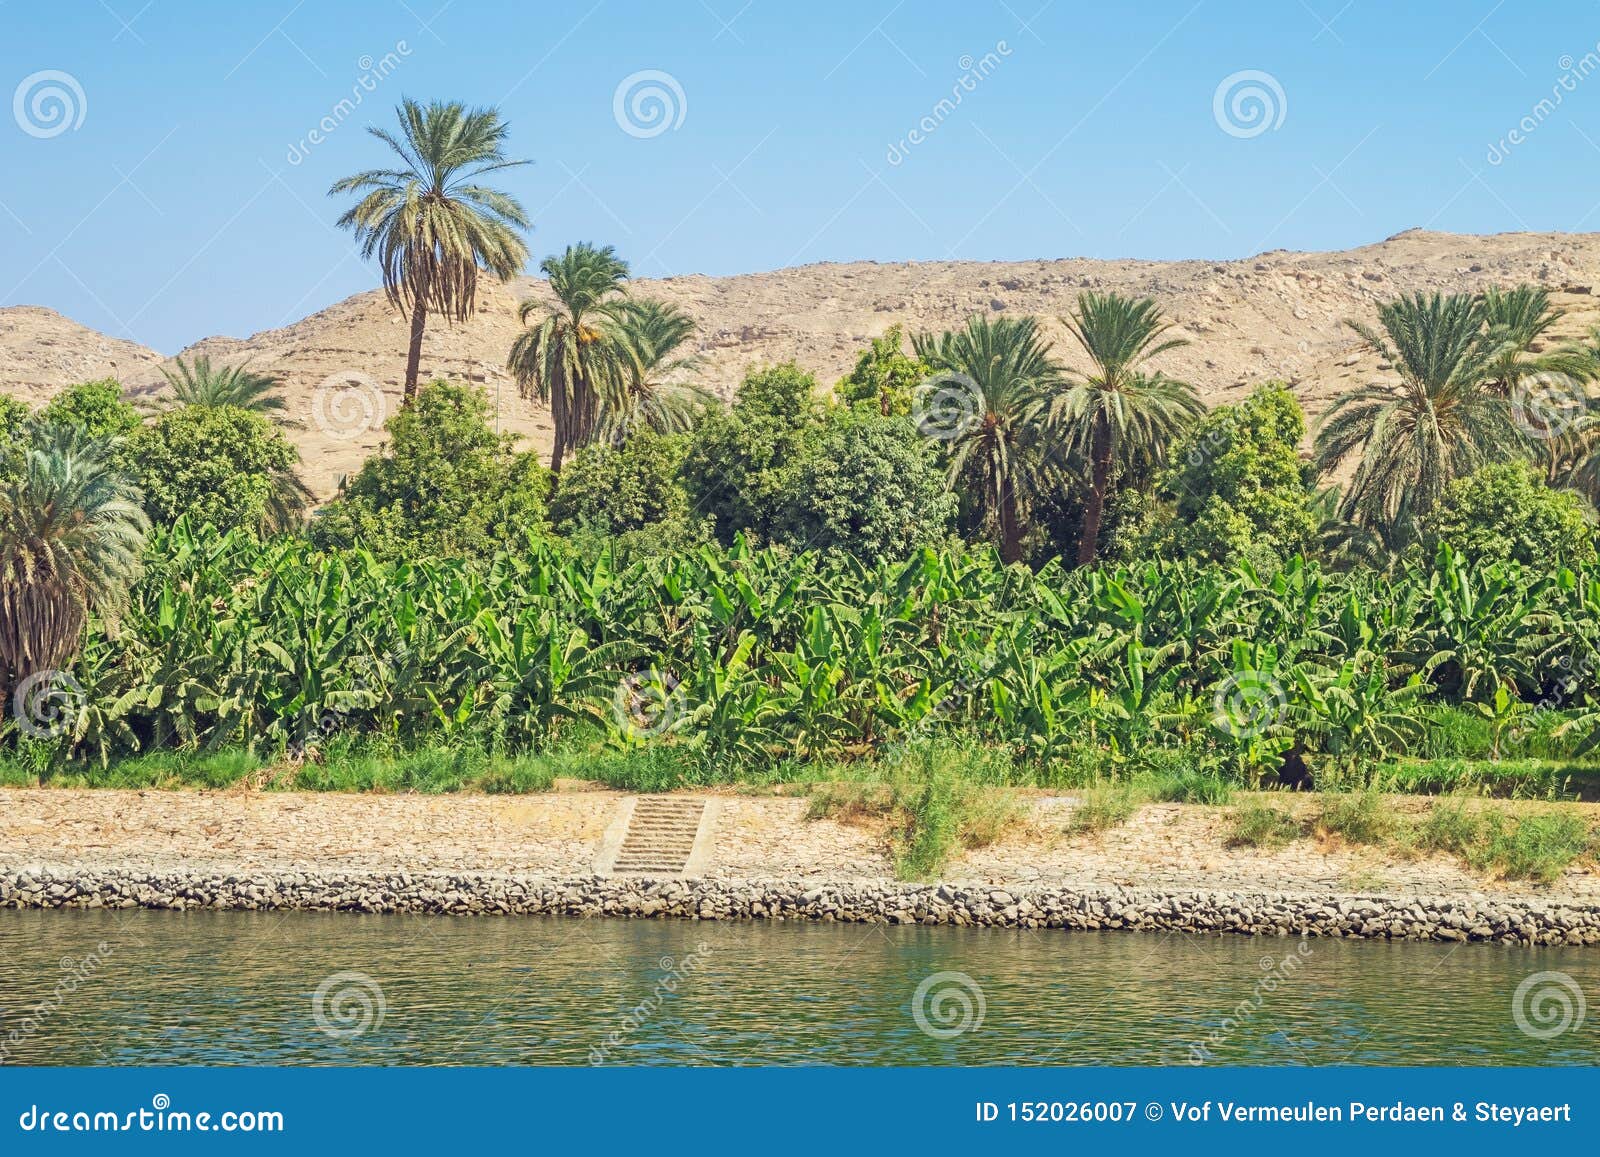 banana plantation on the shore of the nile at gaafar el-sadik